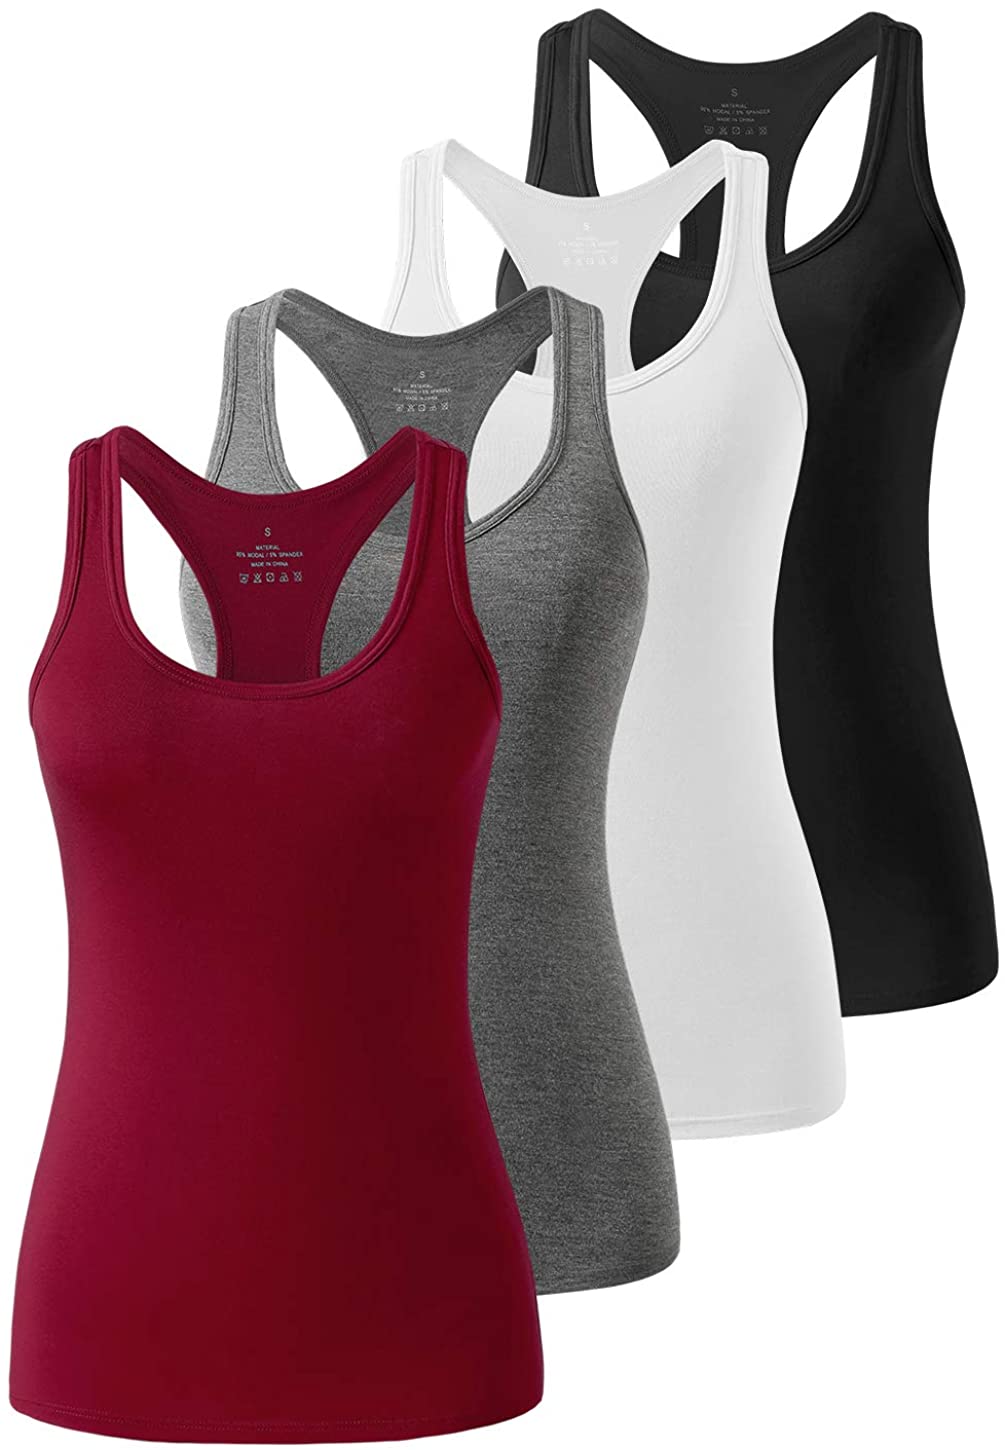 Femdouce Racerback Workout Tank top for Women Activewear Running top Yoga 4 Pack 